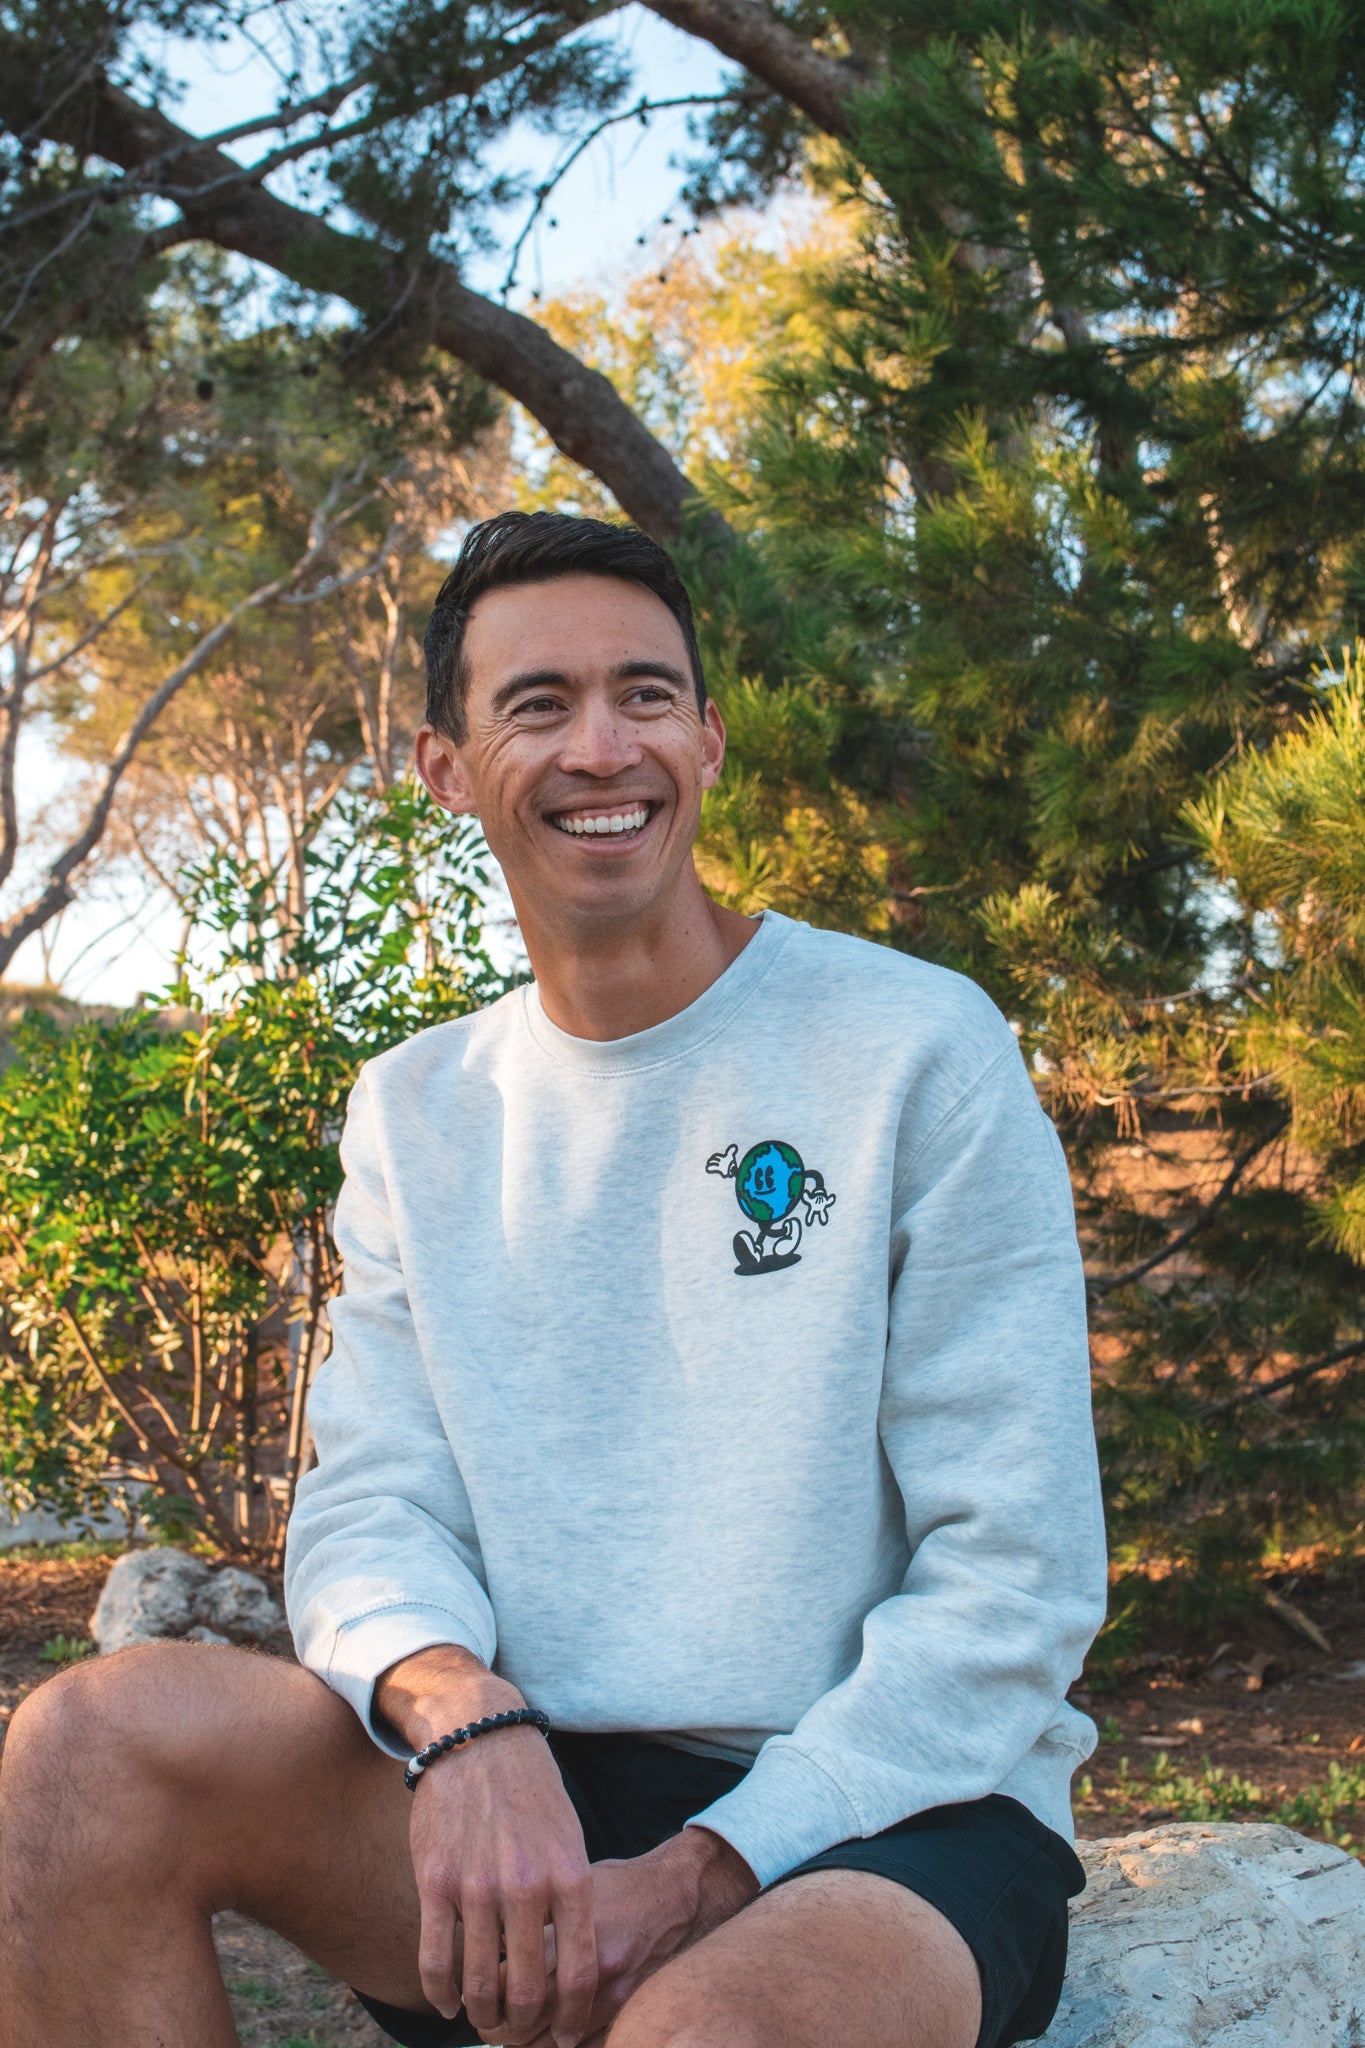 Nature Club Crewneck Sweatshirt - LACO Gives